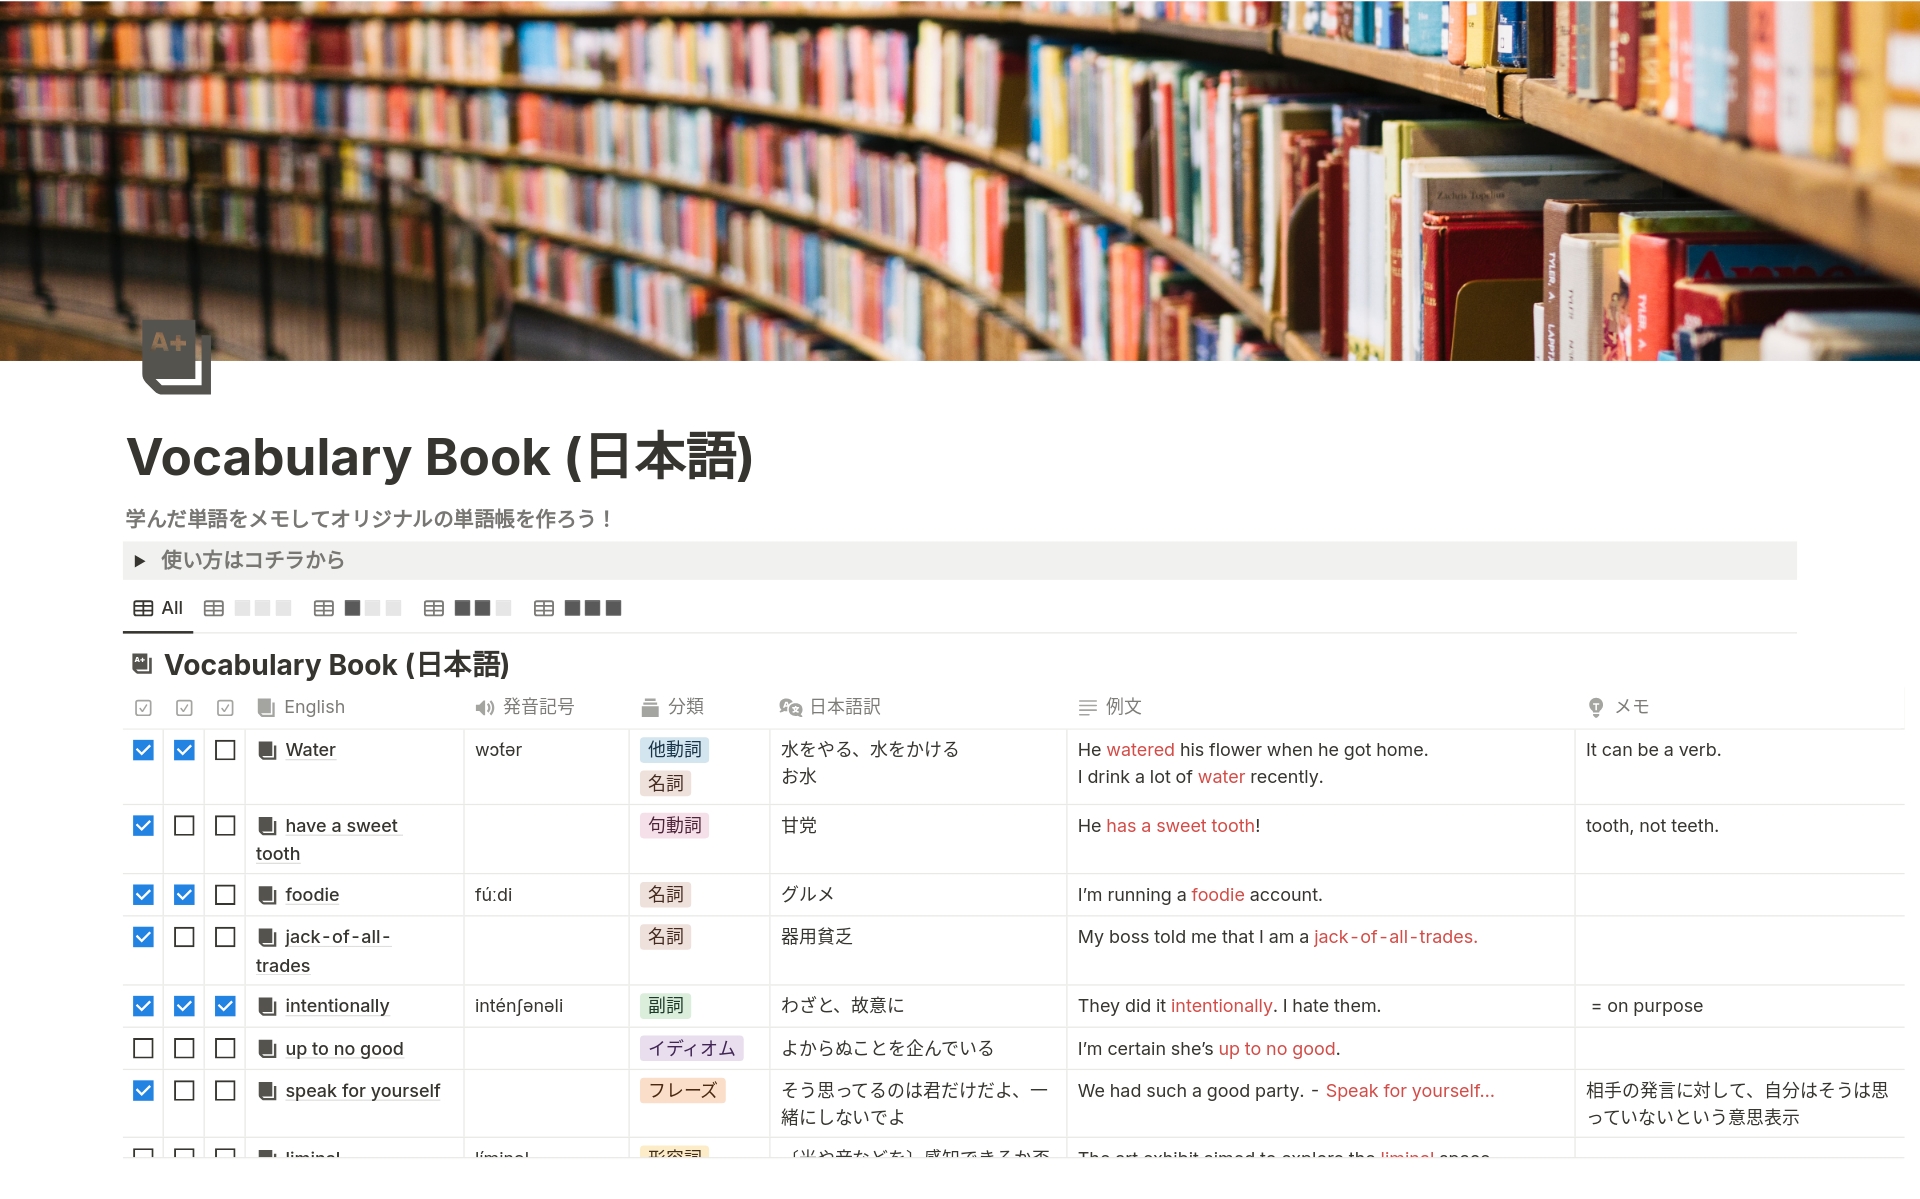 Vocabulary Book (日本語)님의 템플릿 미리보기